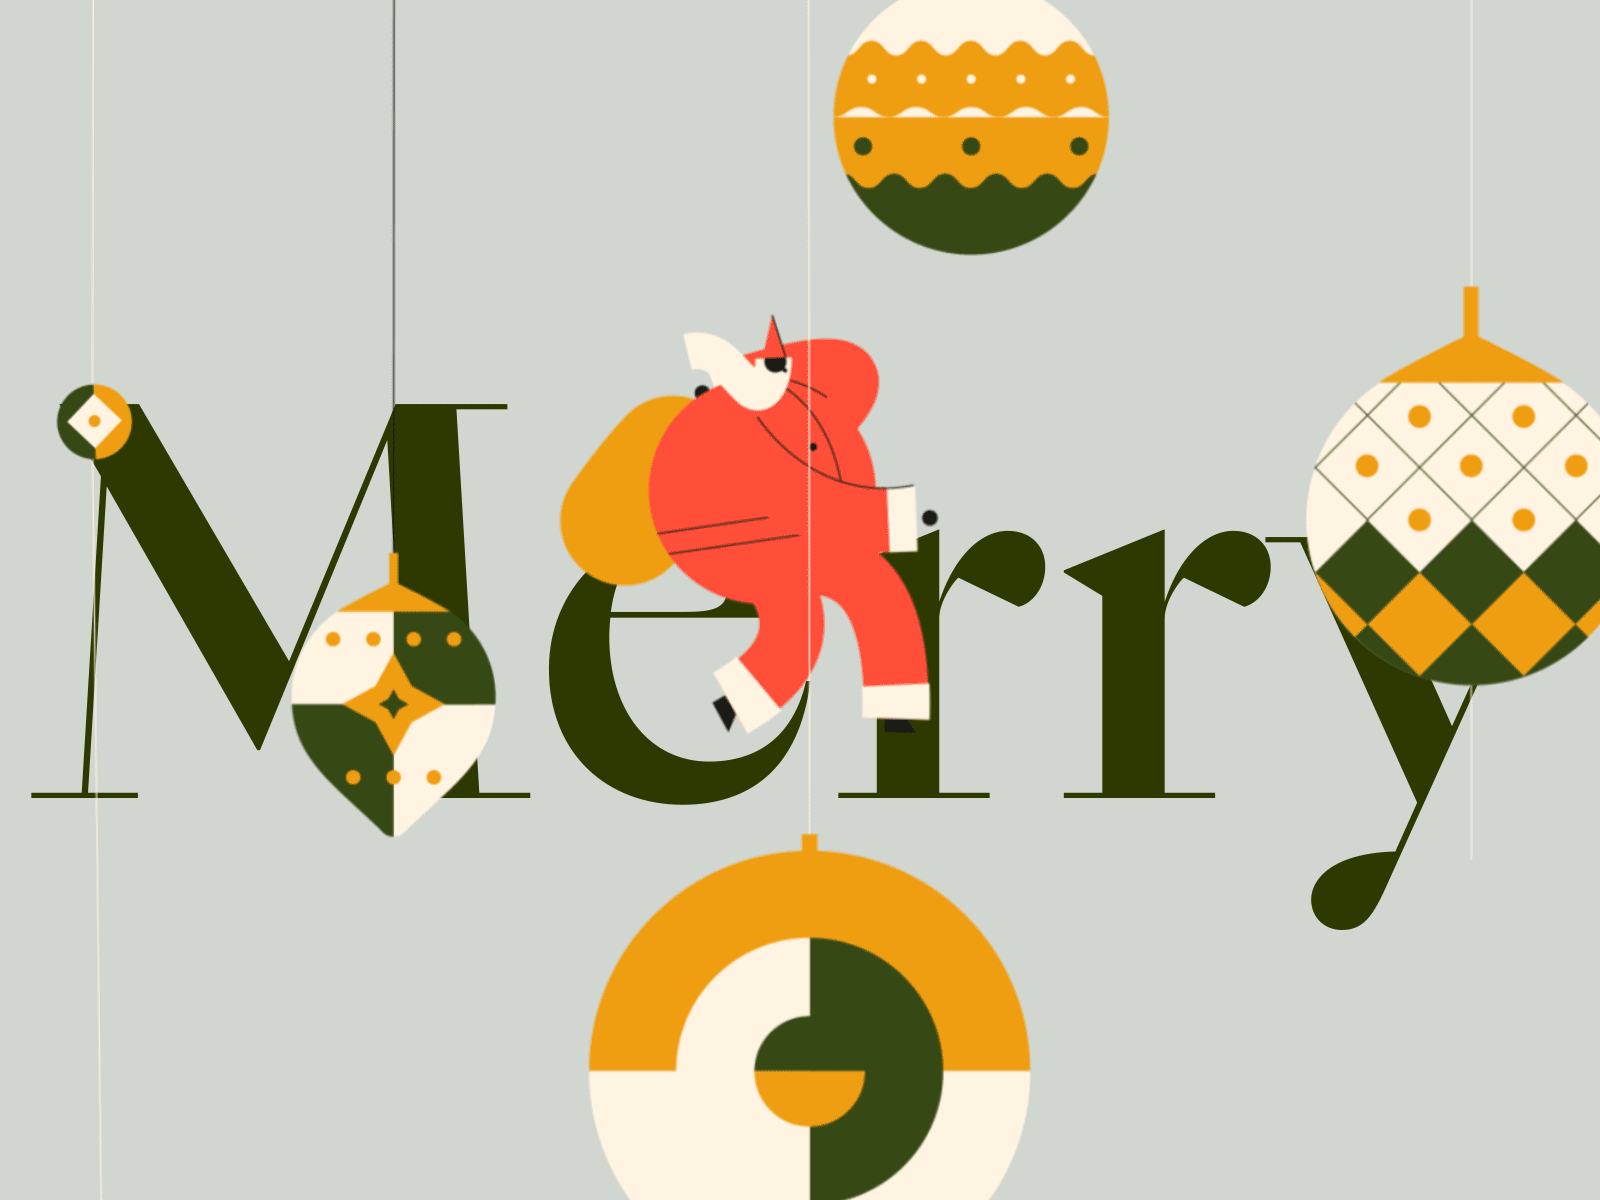 December 25th : Merry Xmas